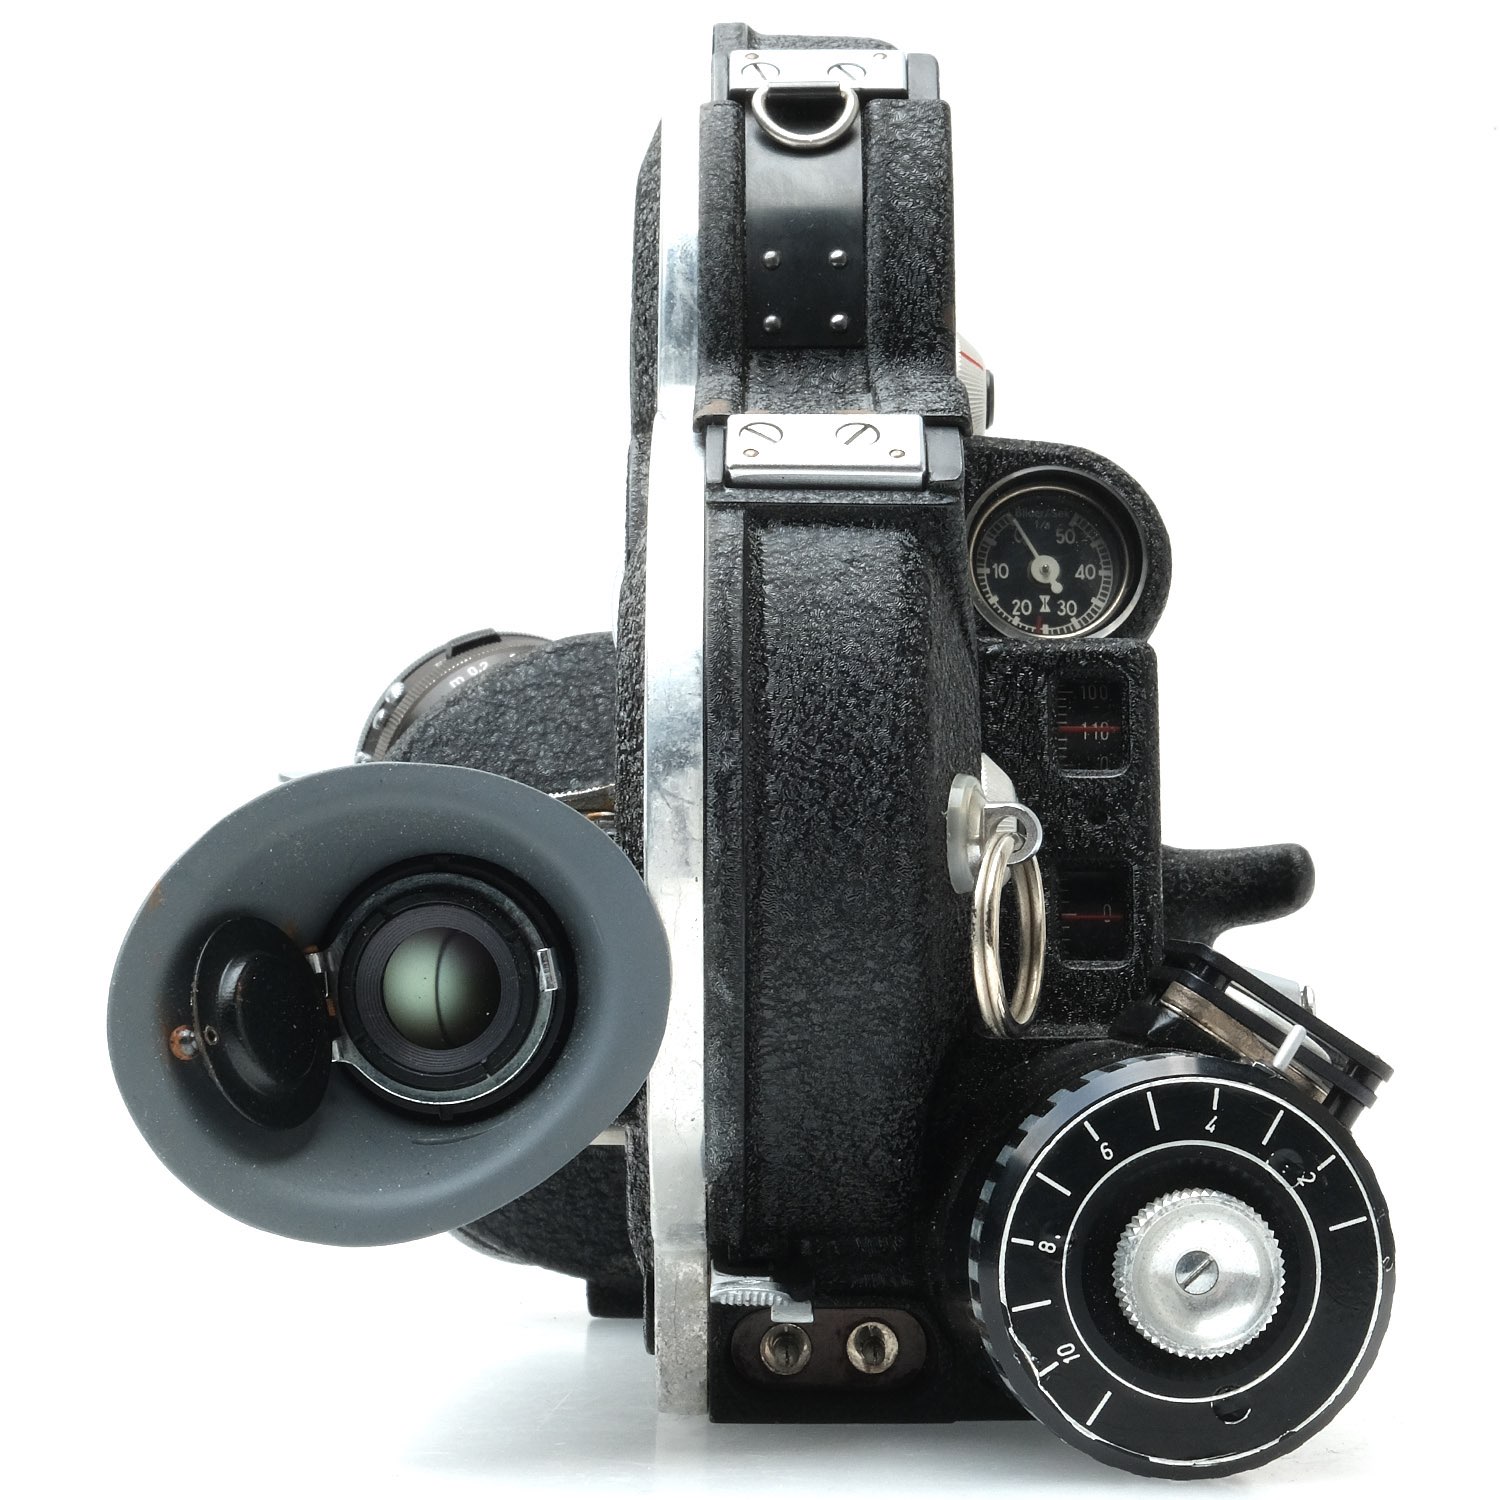 Arriflex 16ST, 5.9mm, 10mm, 25mm Lenses, Mags & Cases 19667